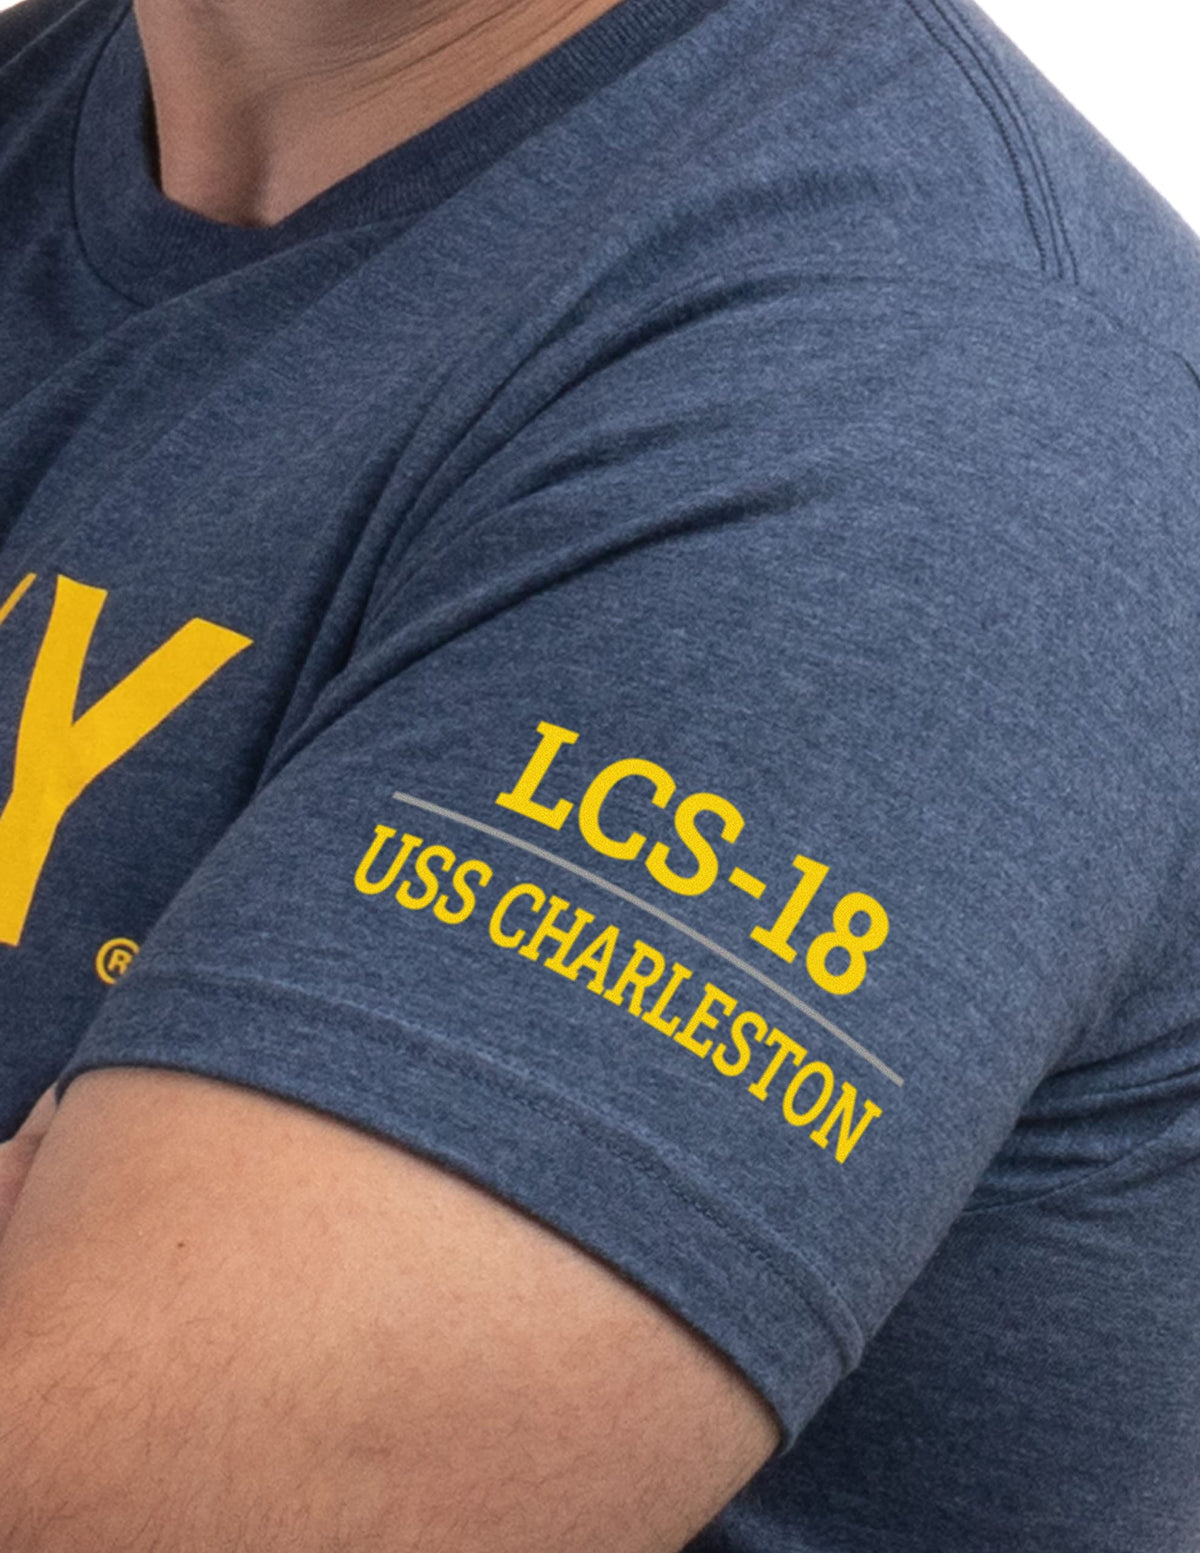 USS Charleston, LCS-18 | U.S. Navy Sailor Veteran USN United States Naval T-shirt for Men Women